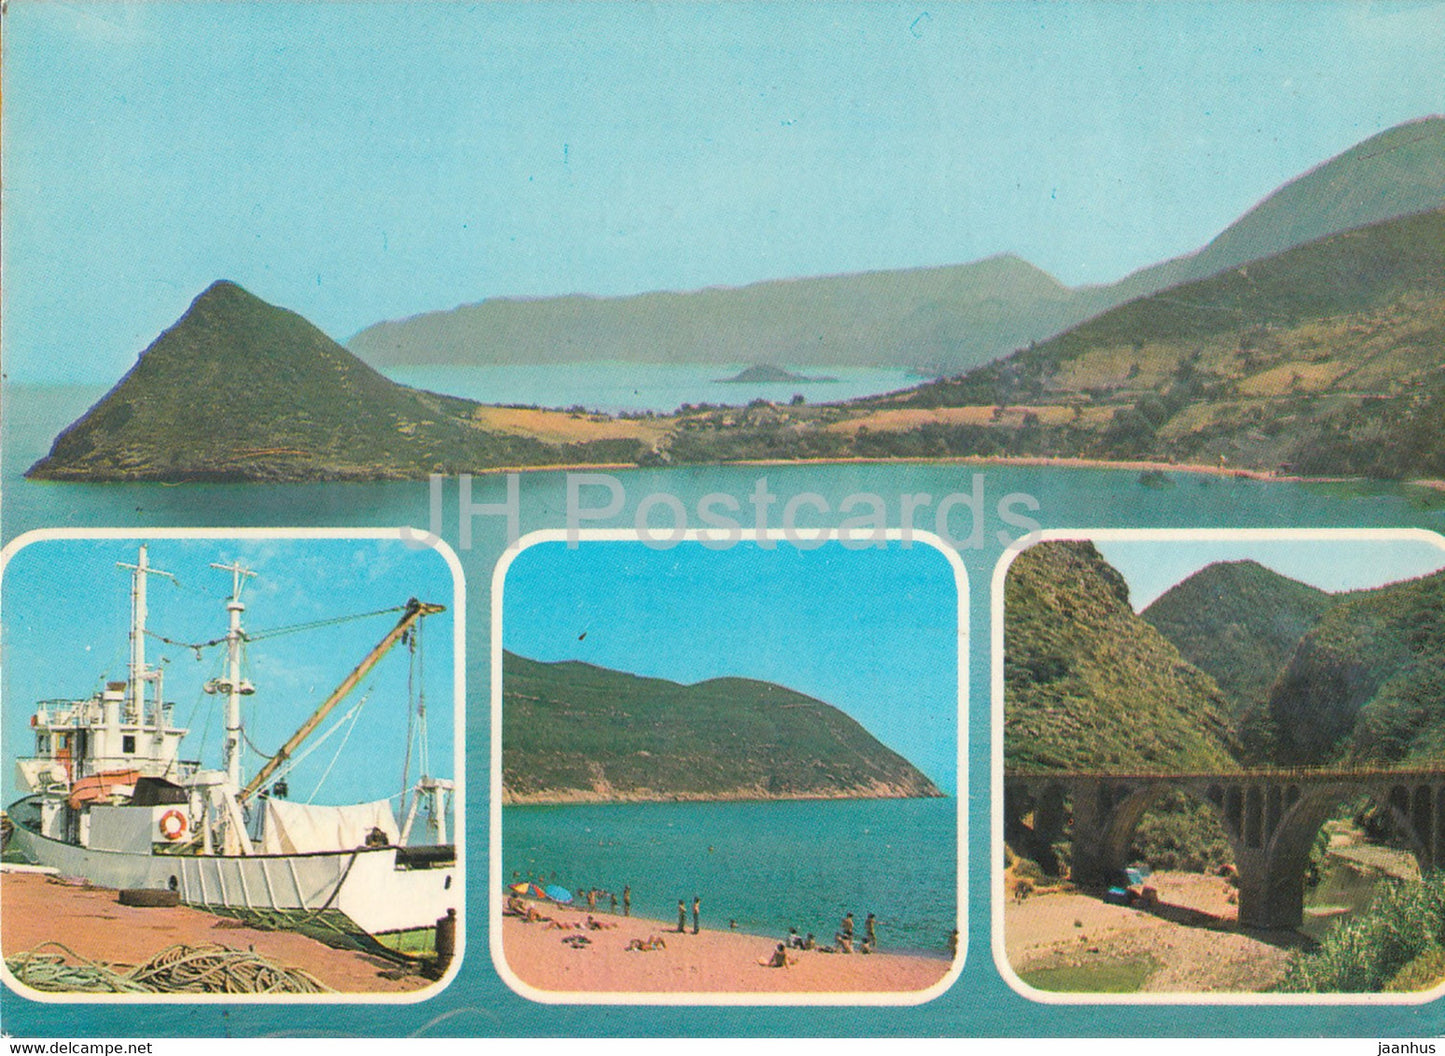 Souvenir de la Corniche Djidjelienne - views - boat - Algeria - used - JH Postcards